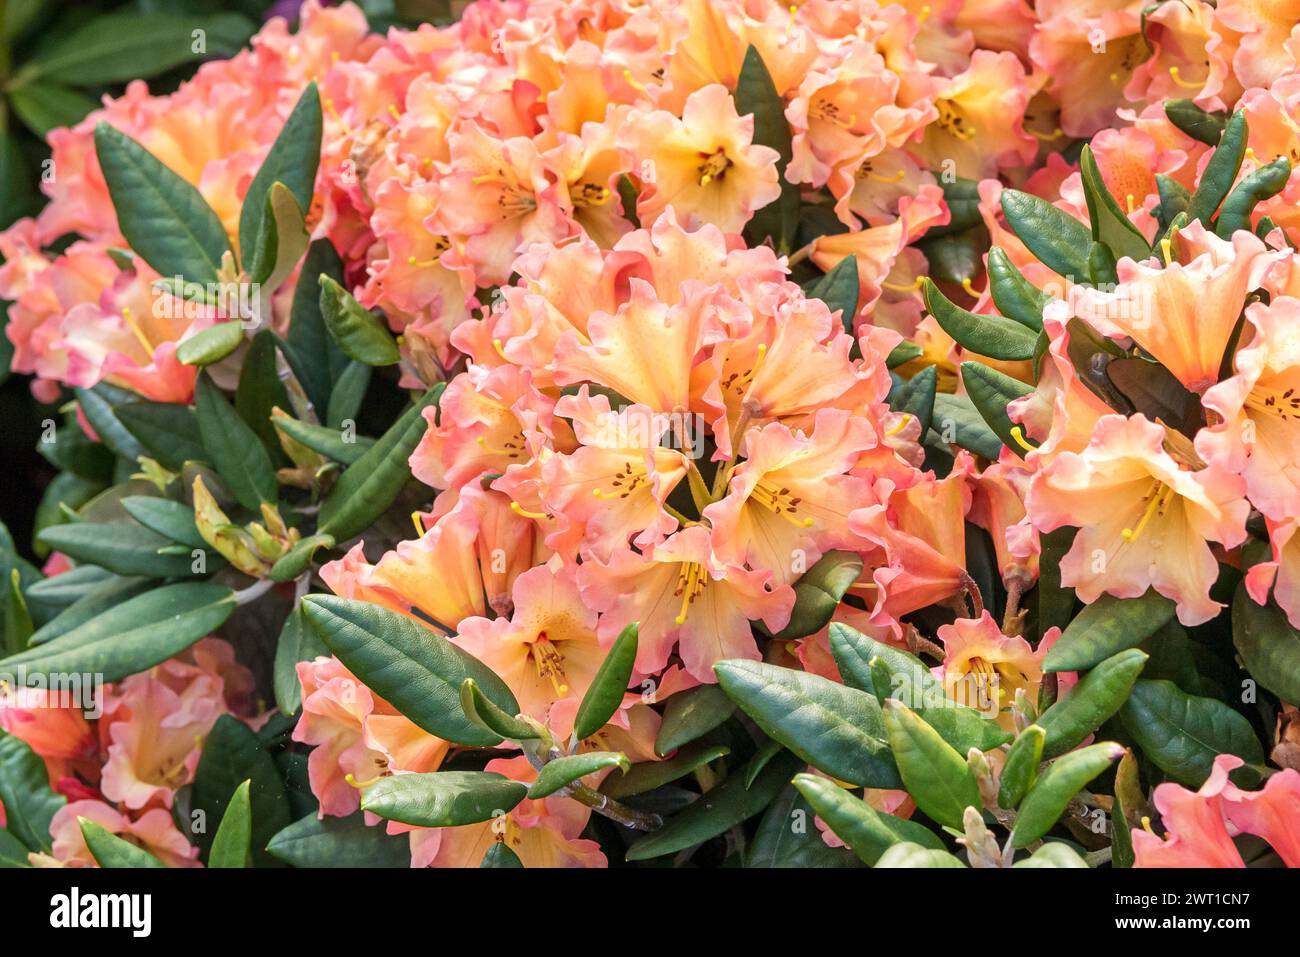 Rhododendron (Rhododendron 'Lullaby', Rhododendron Kermesina Lullaby), fioritura, cultivar Lullaby Foto Stock